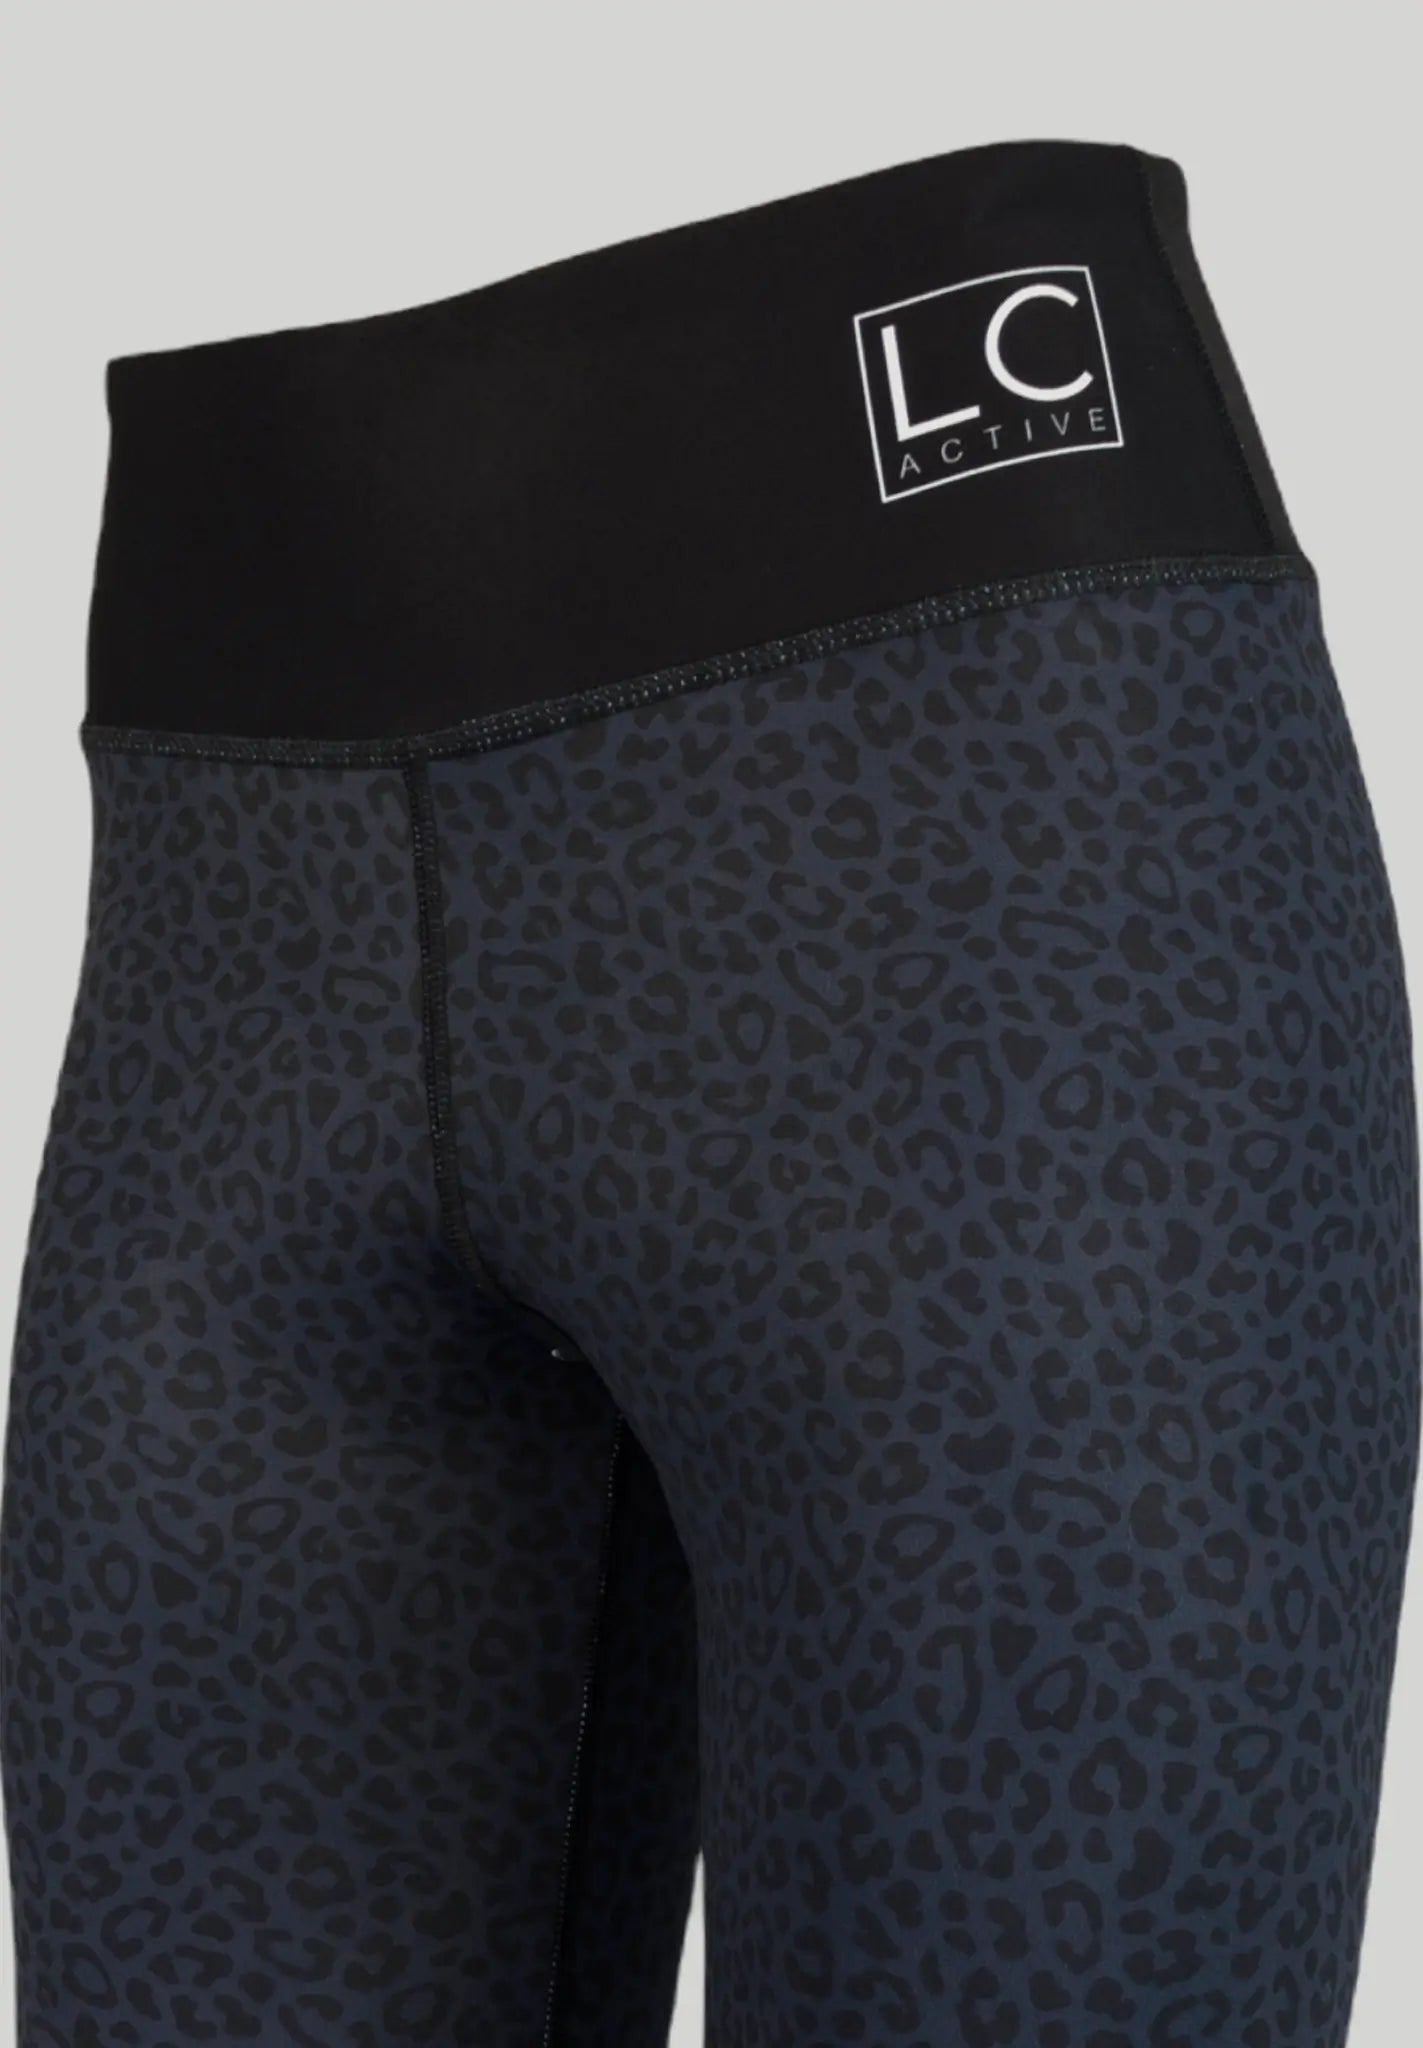 High-Waisted-Gym-Leggings-For-Women-Blue-Black Leopard Print Leggings-LC-Active